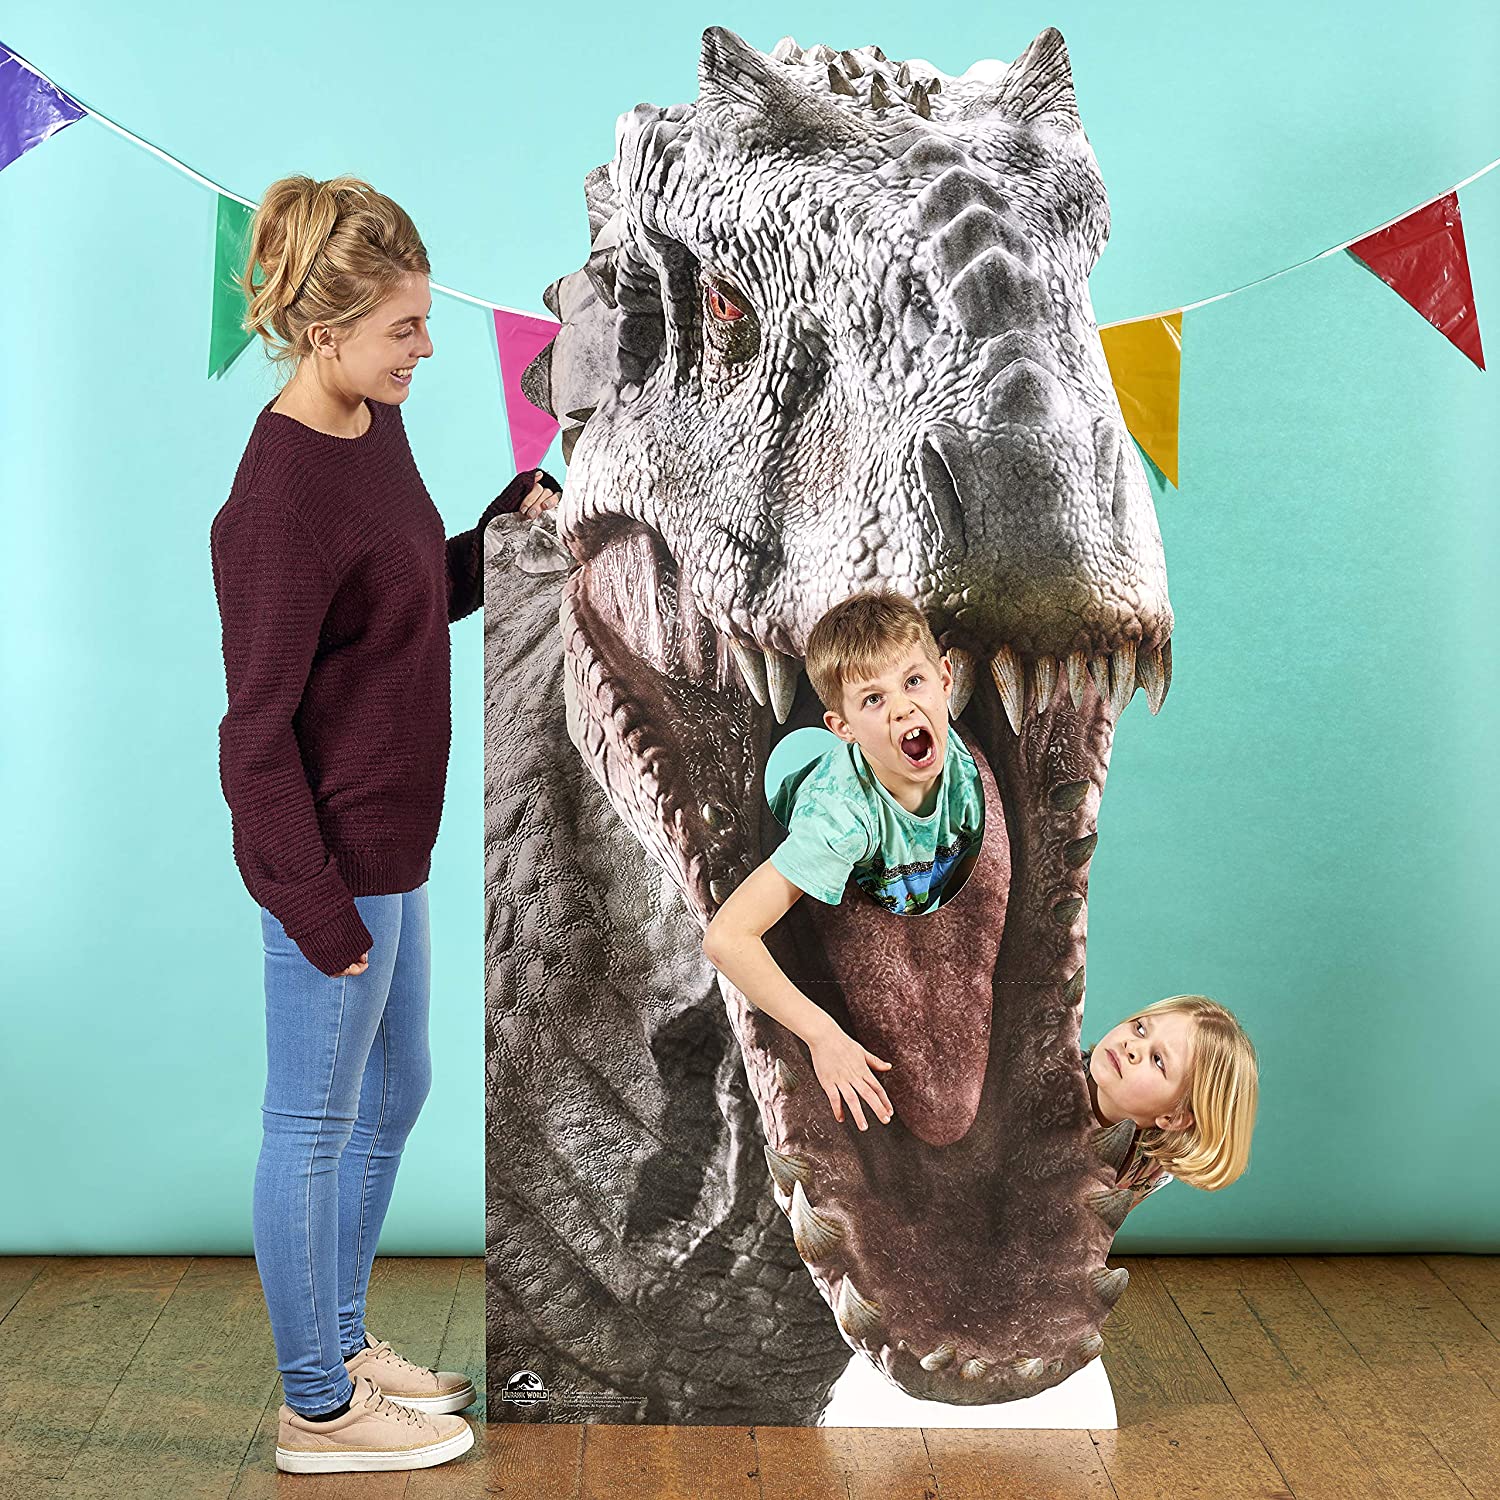 Indominus Rex Official Jurassic World Cardboard Cutout / Standee